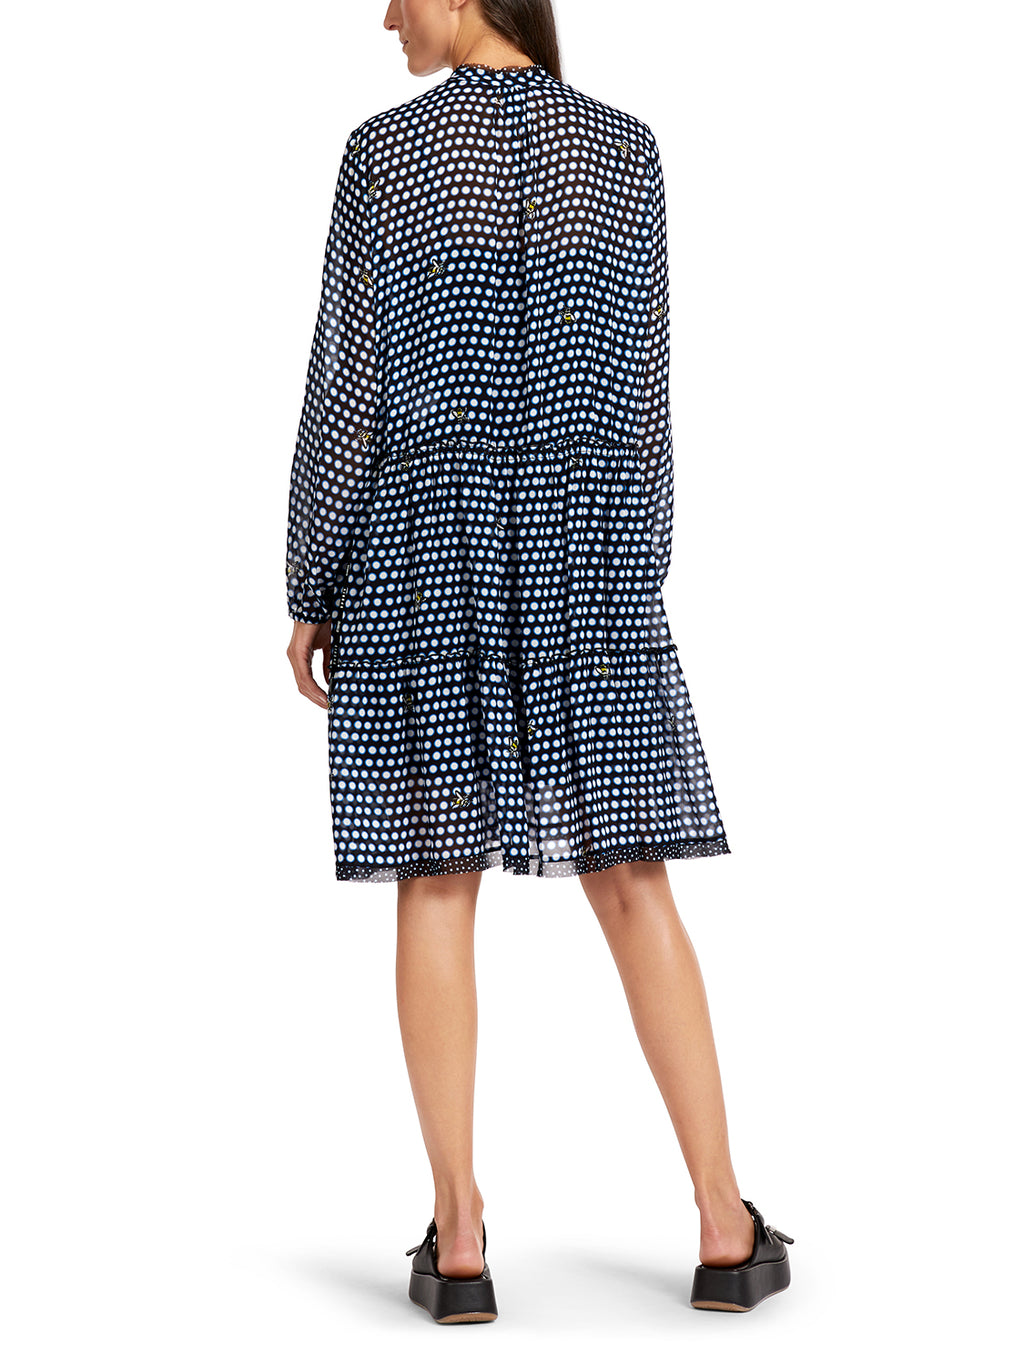 MarcCain Polka Dot Dress with Bee Print US2102W31